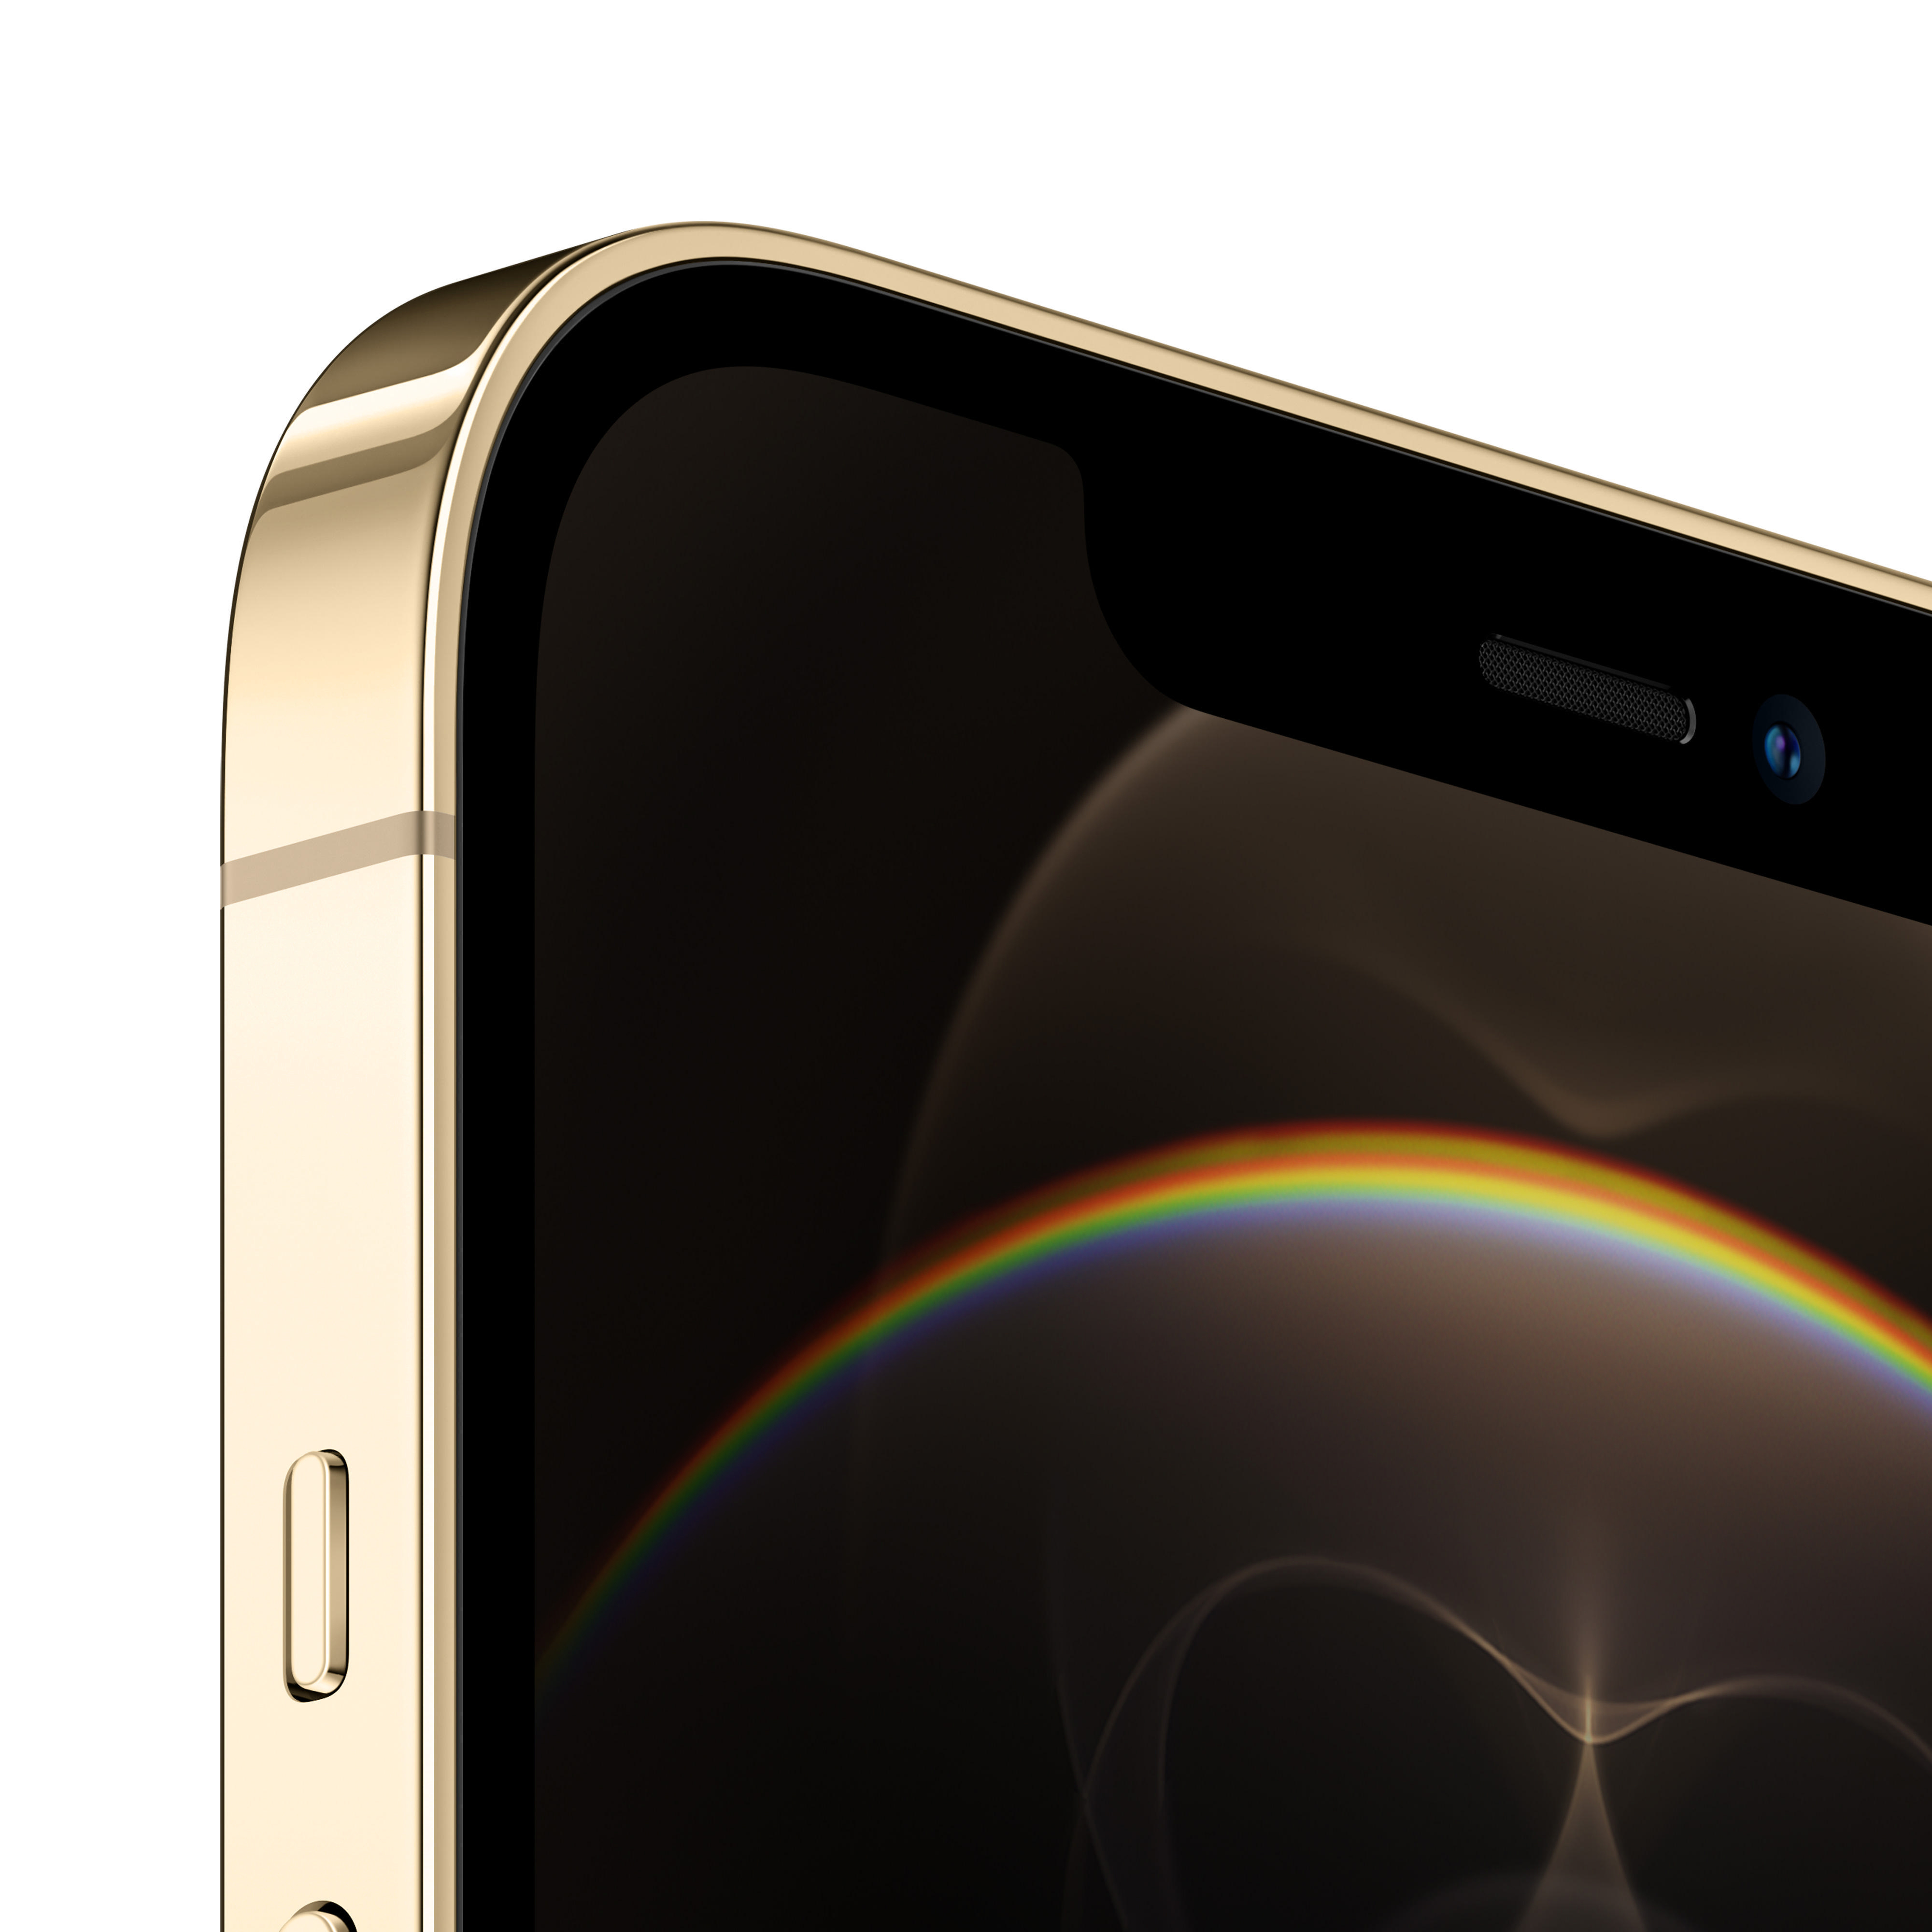 APPLE iPhone 12 Dual SIM Max Gold GB 128 Pro